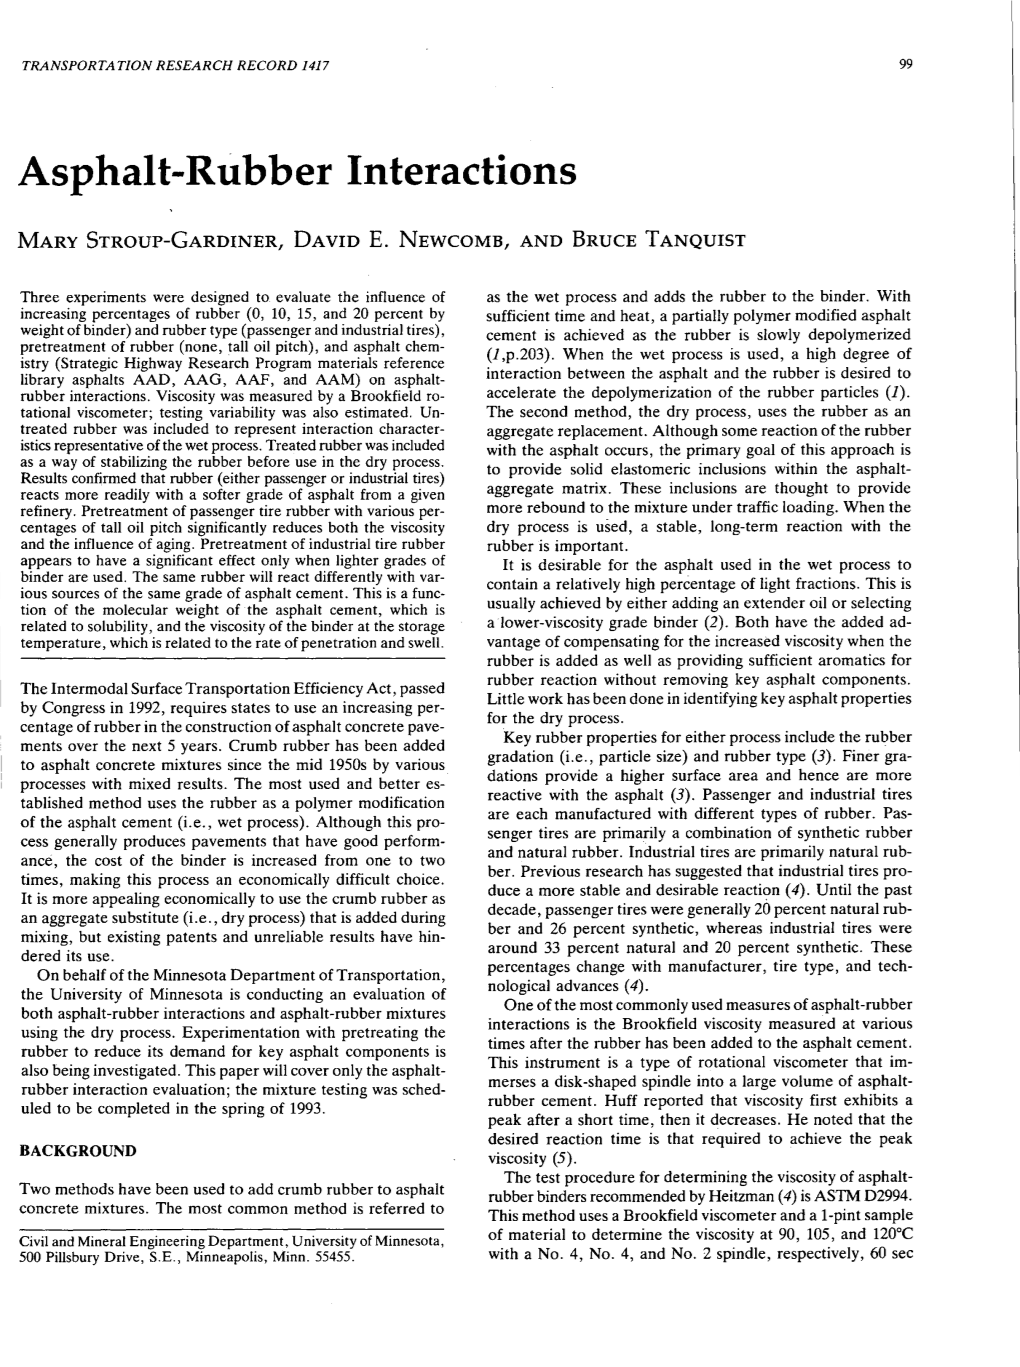 Asphalt-Rubber Interactions